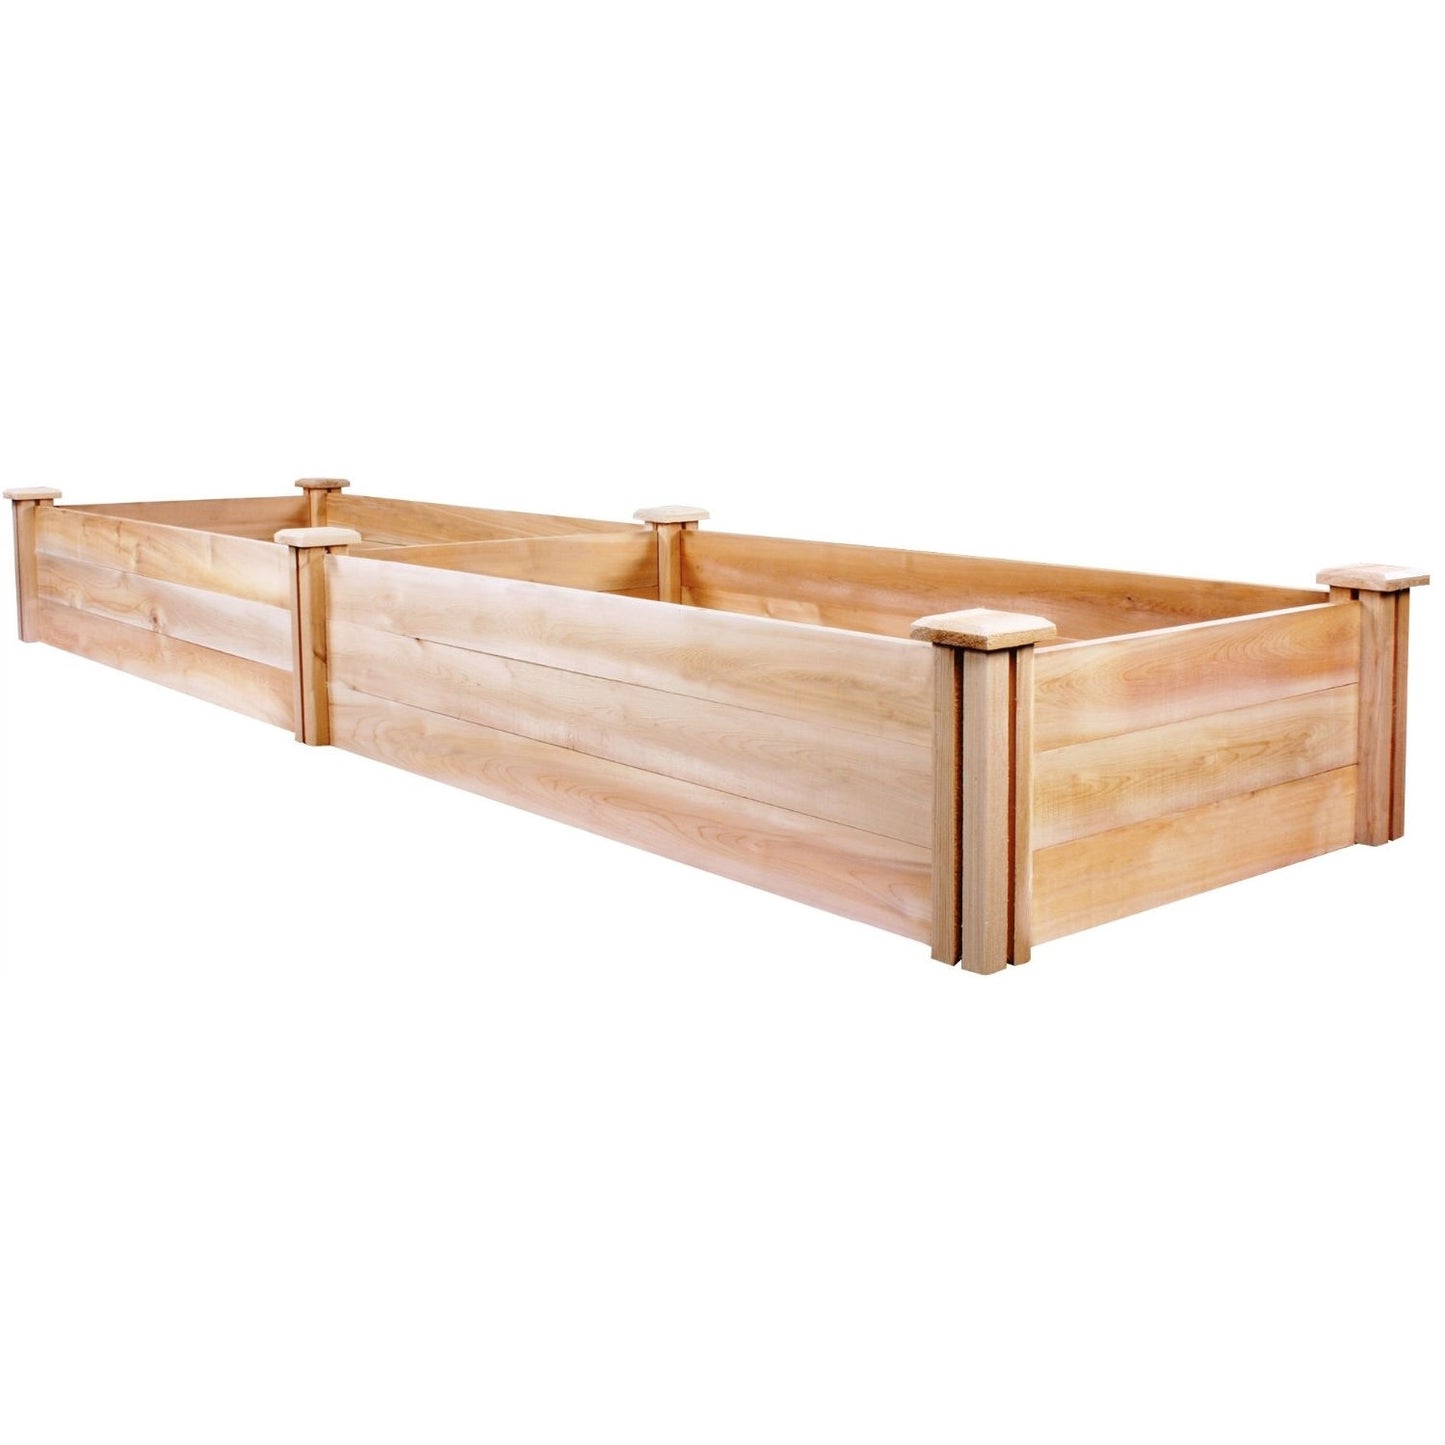 Cedar Wood 2-Ft x 8-Ft Outdoor Raised Garden Bed Planter Frame - Made in USA